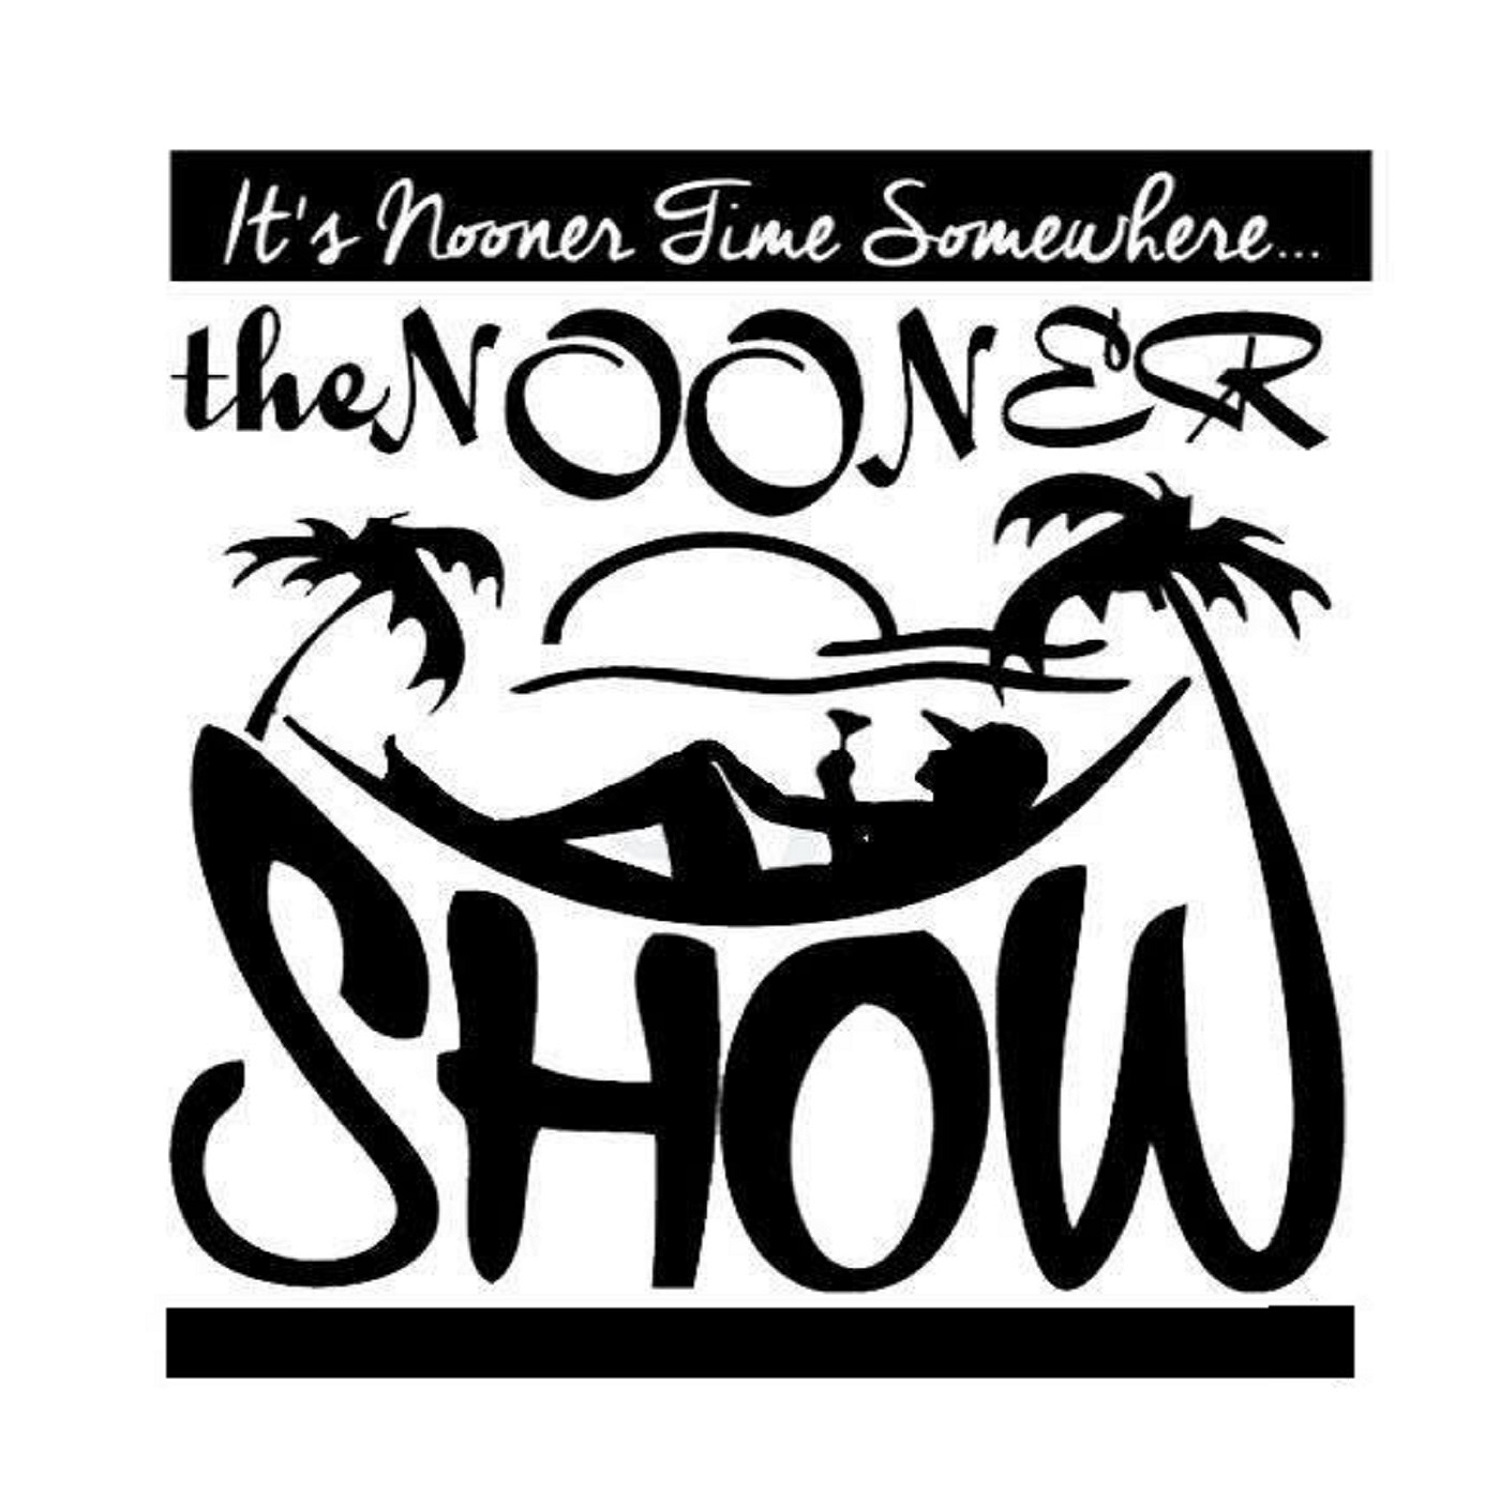 The Nooner Show – Episode 184